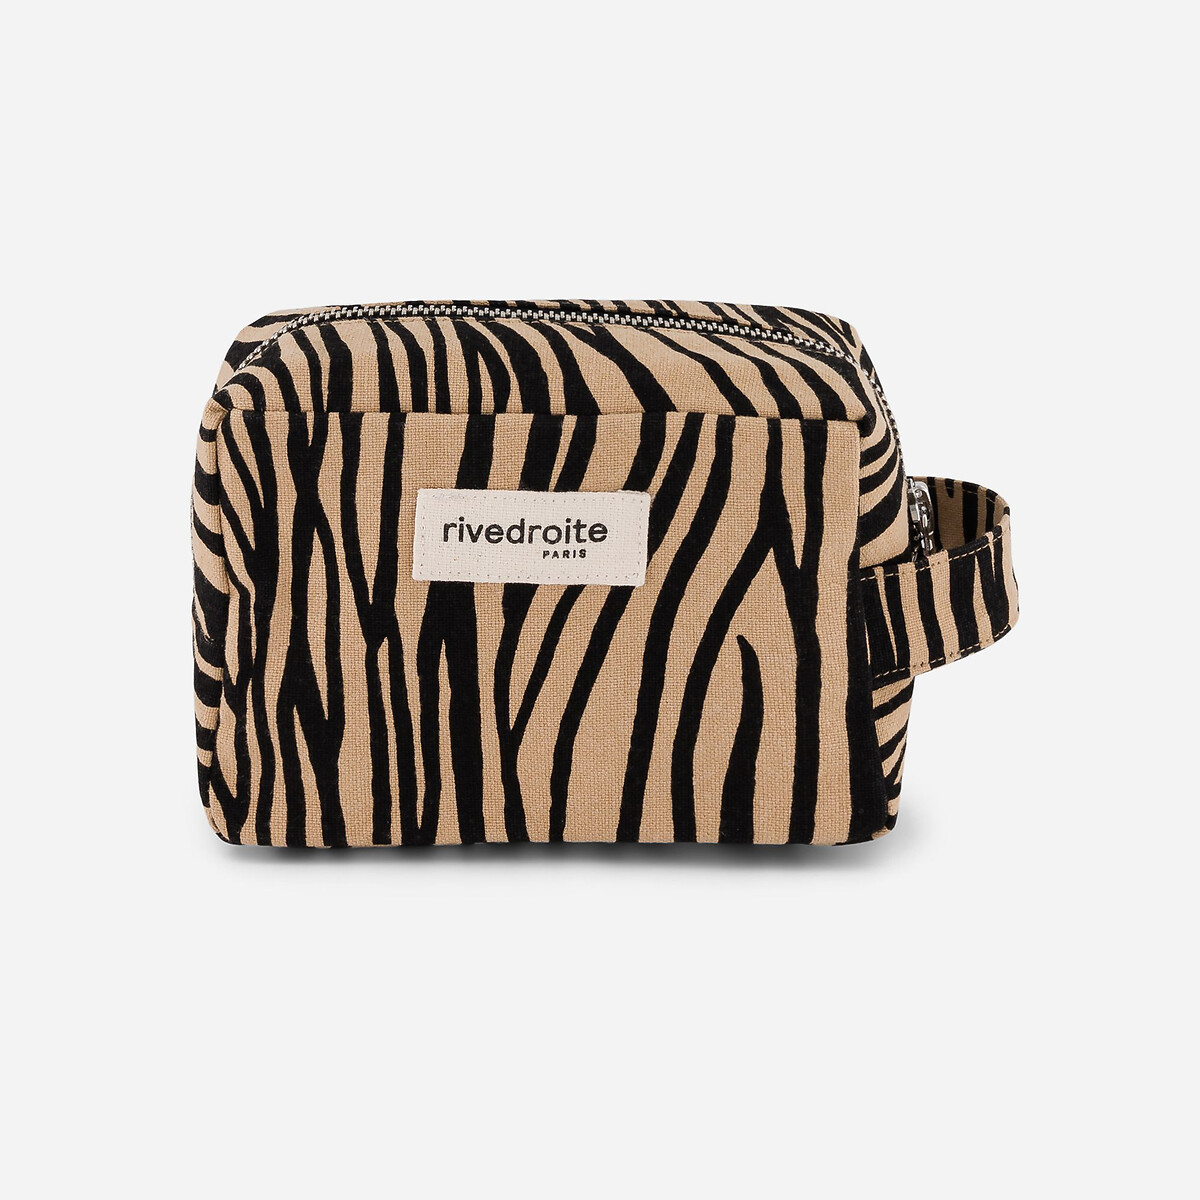 Tournelle Make-Up Bag in Zebra Print Cotton